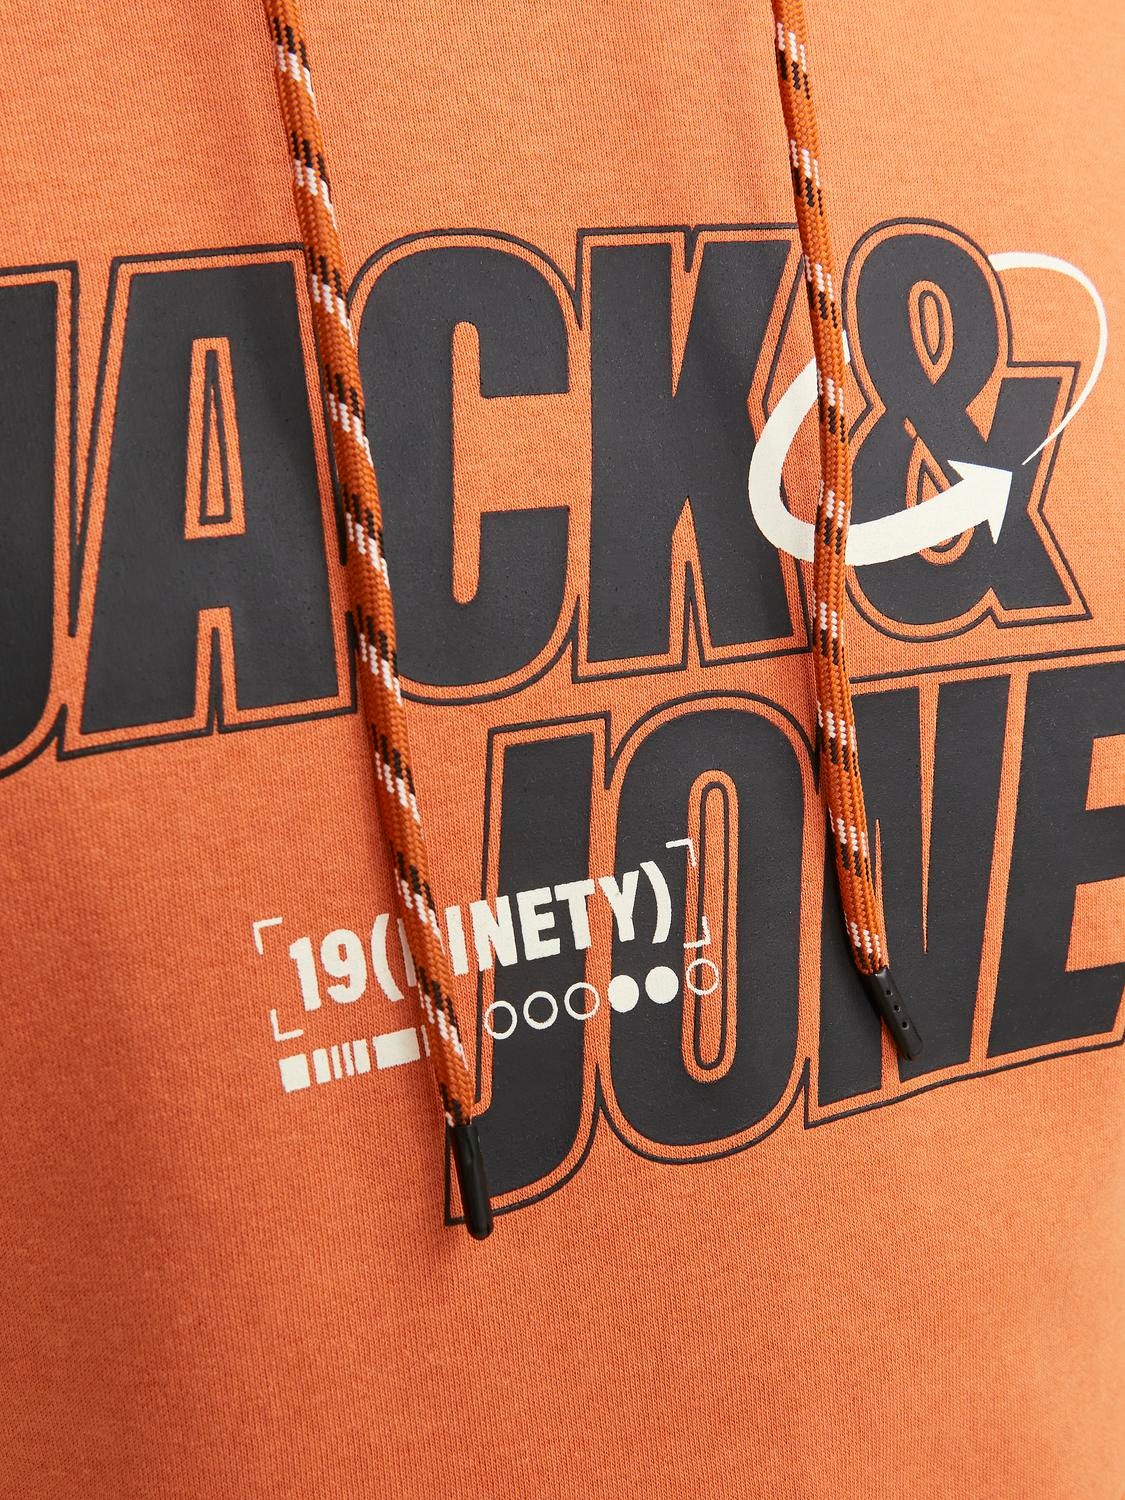 Jack & Jones Logo Hoodie -Apricot Orange - 12245714